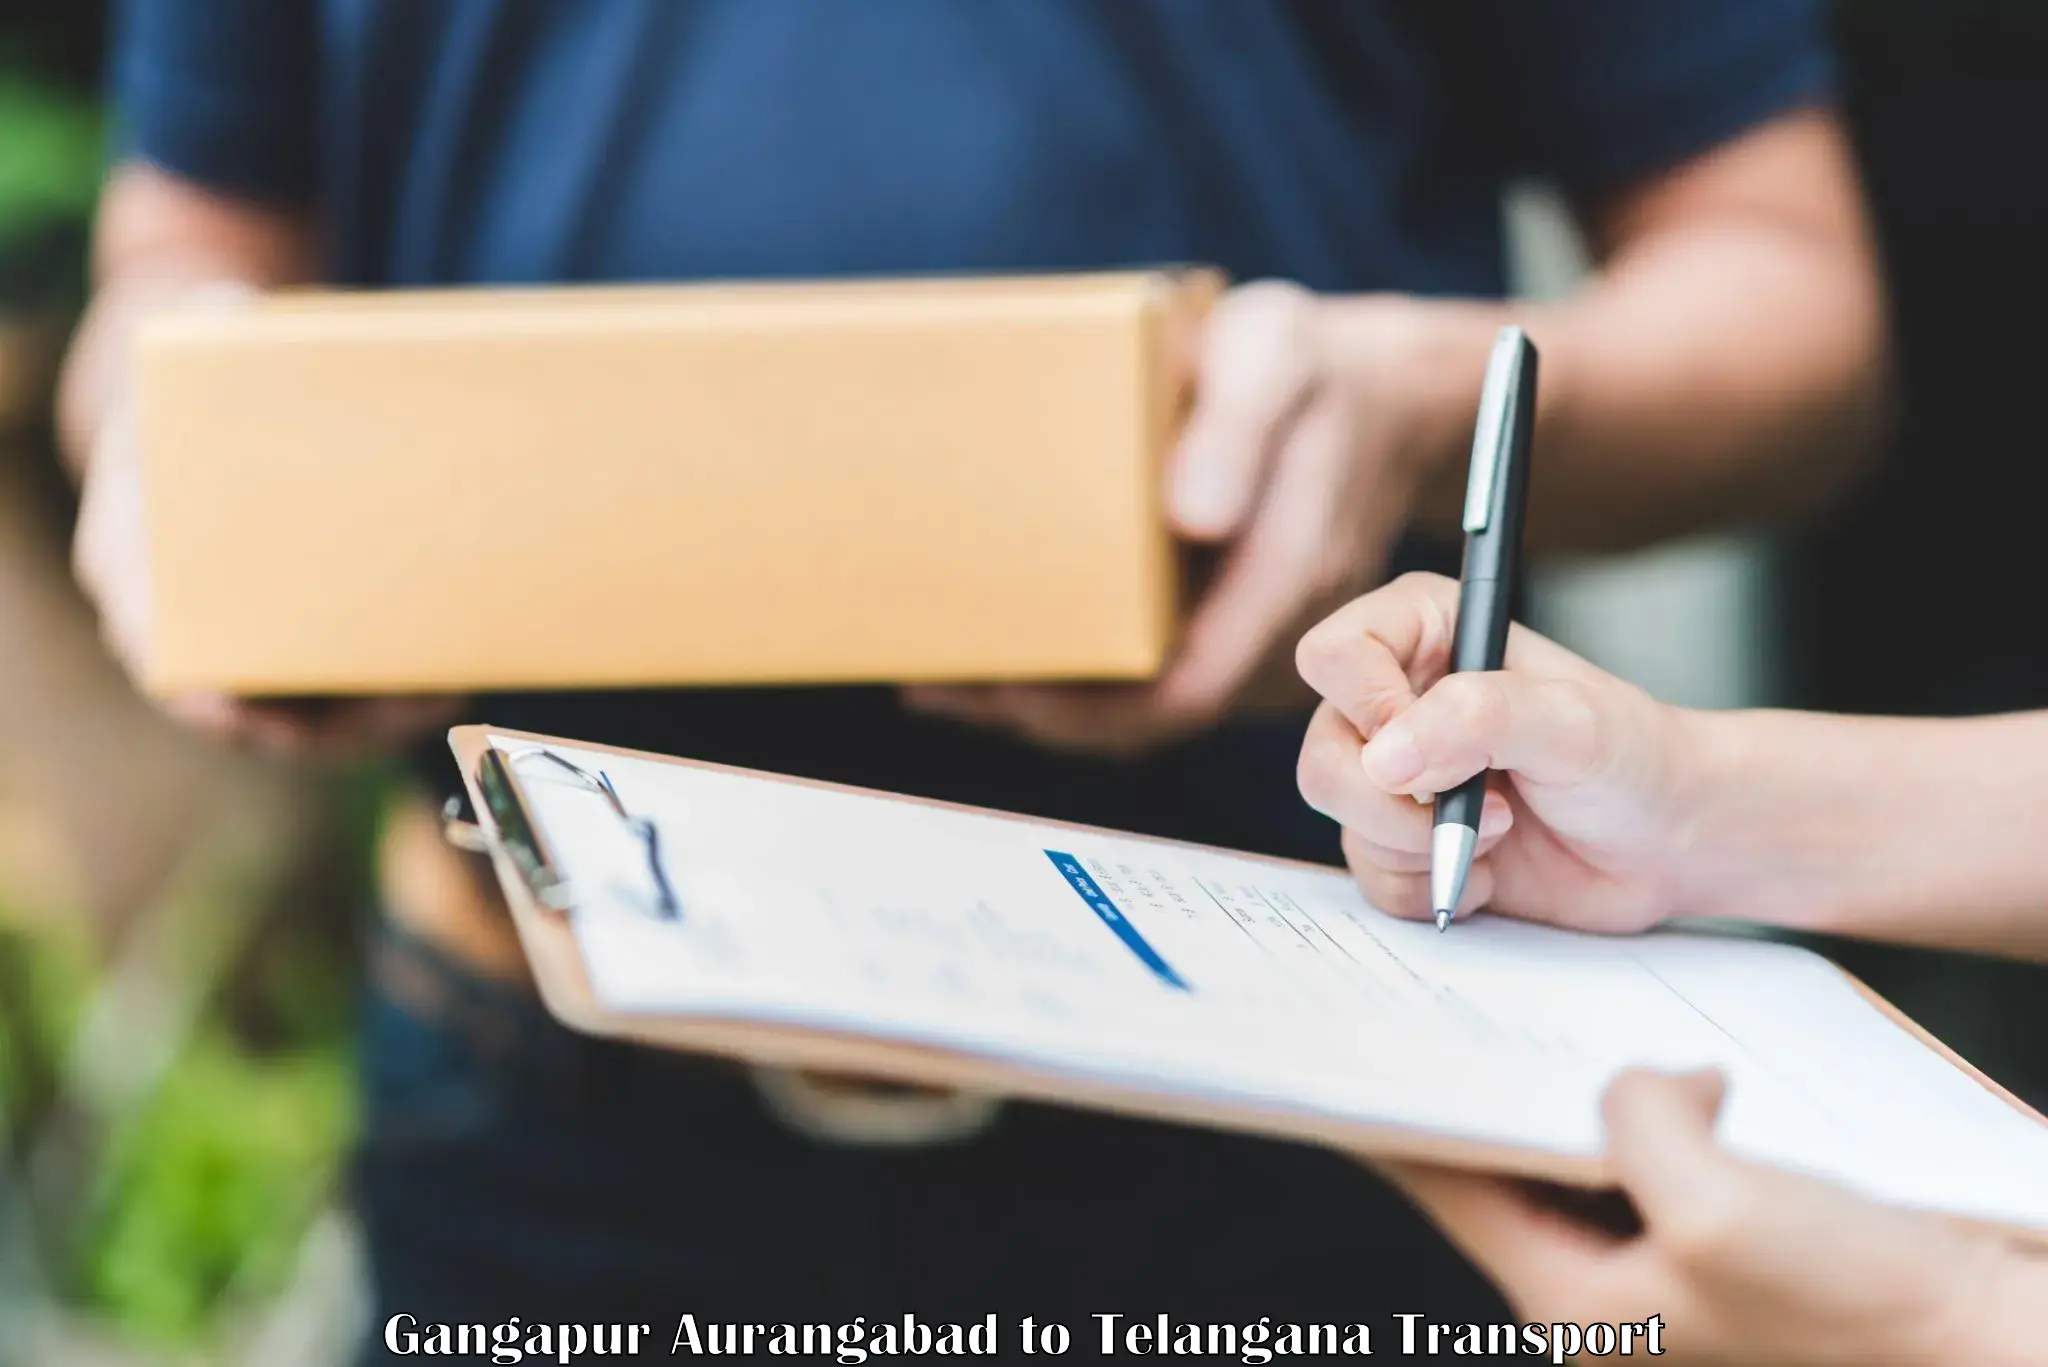 Transport in sharing Gangapur Aurangabad to Balanagar